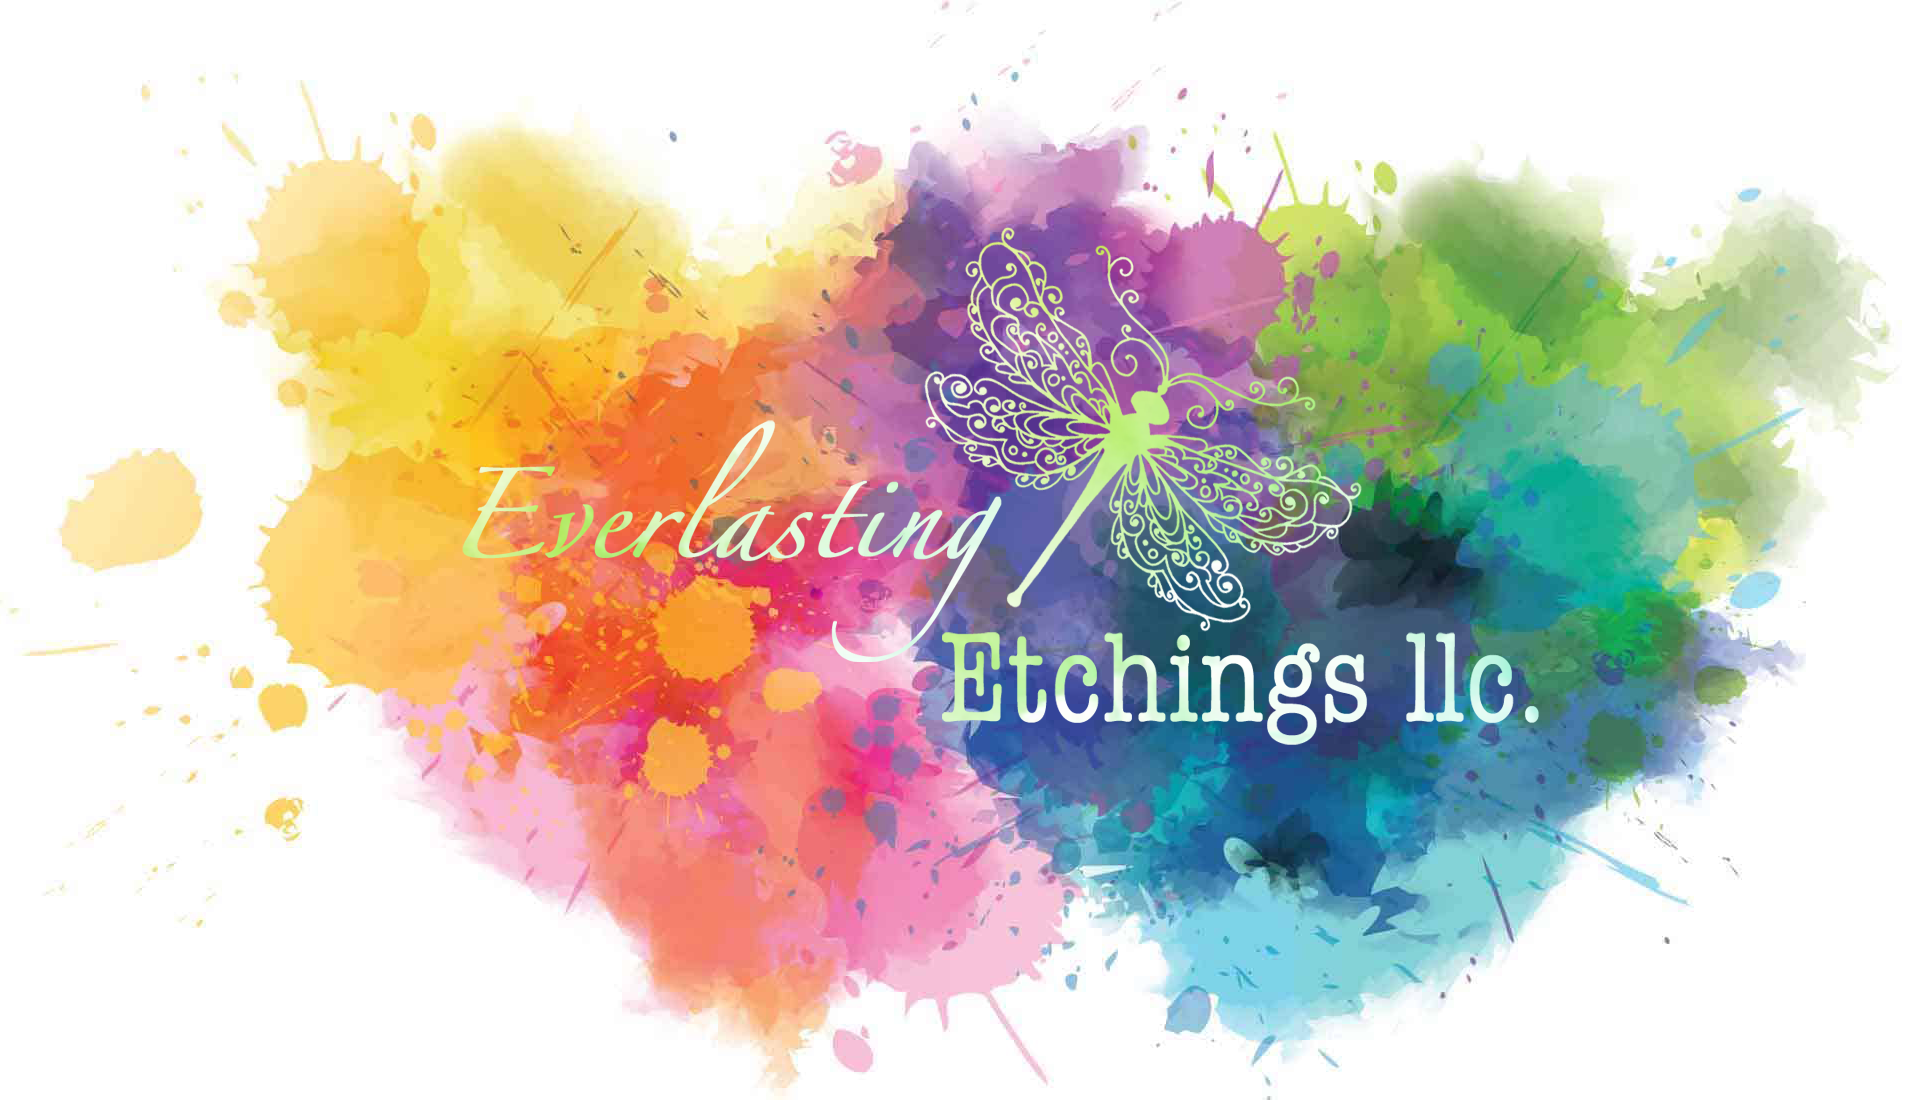 Everlasting Etchings, LLC